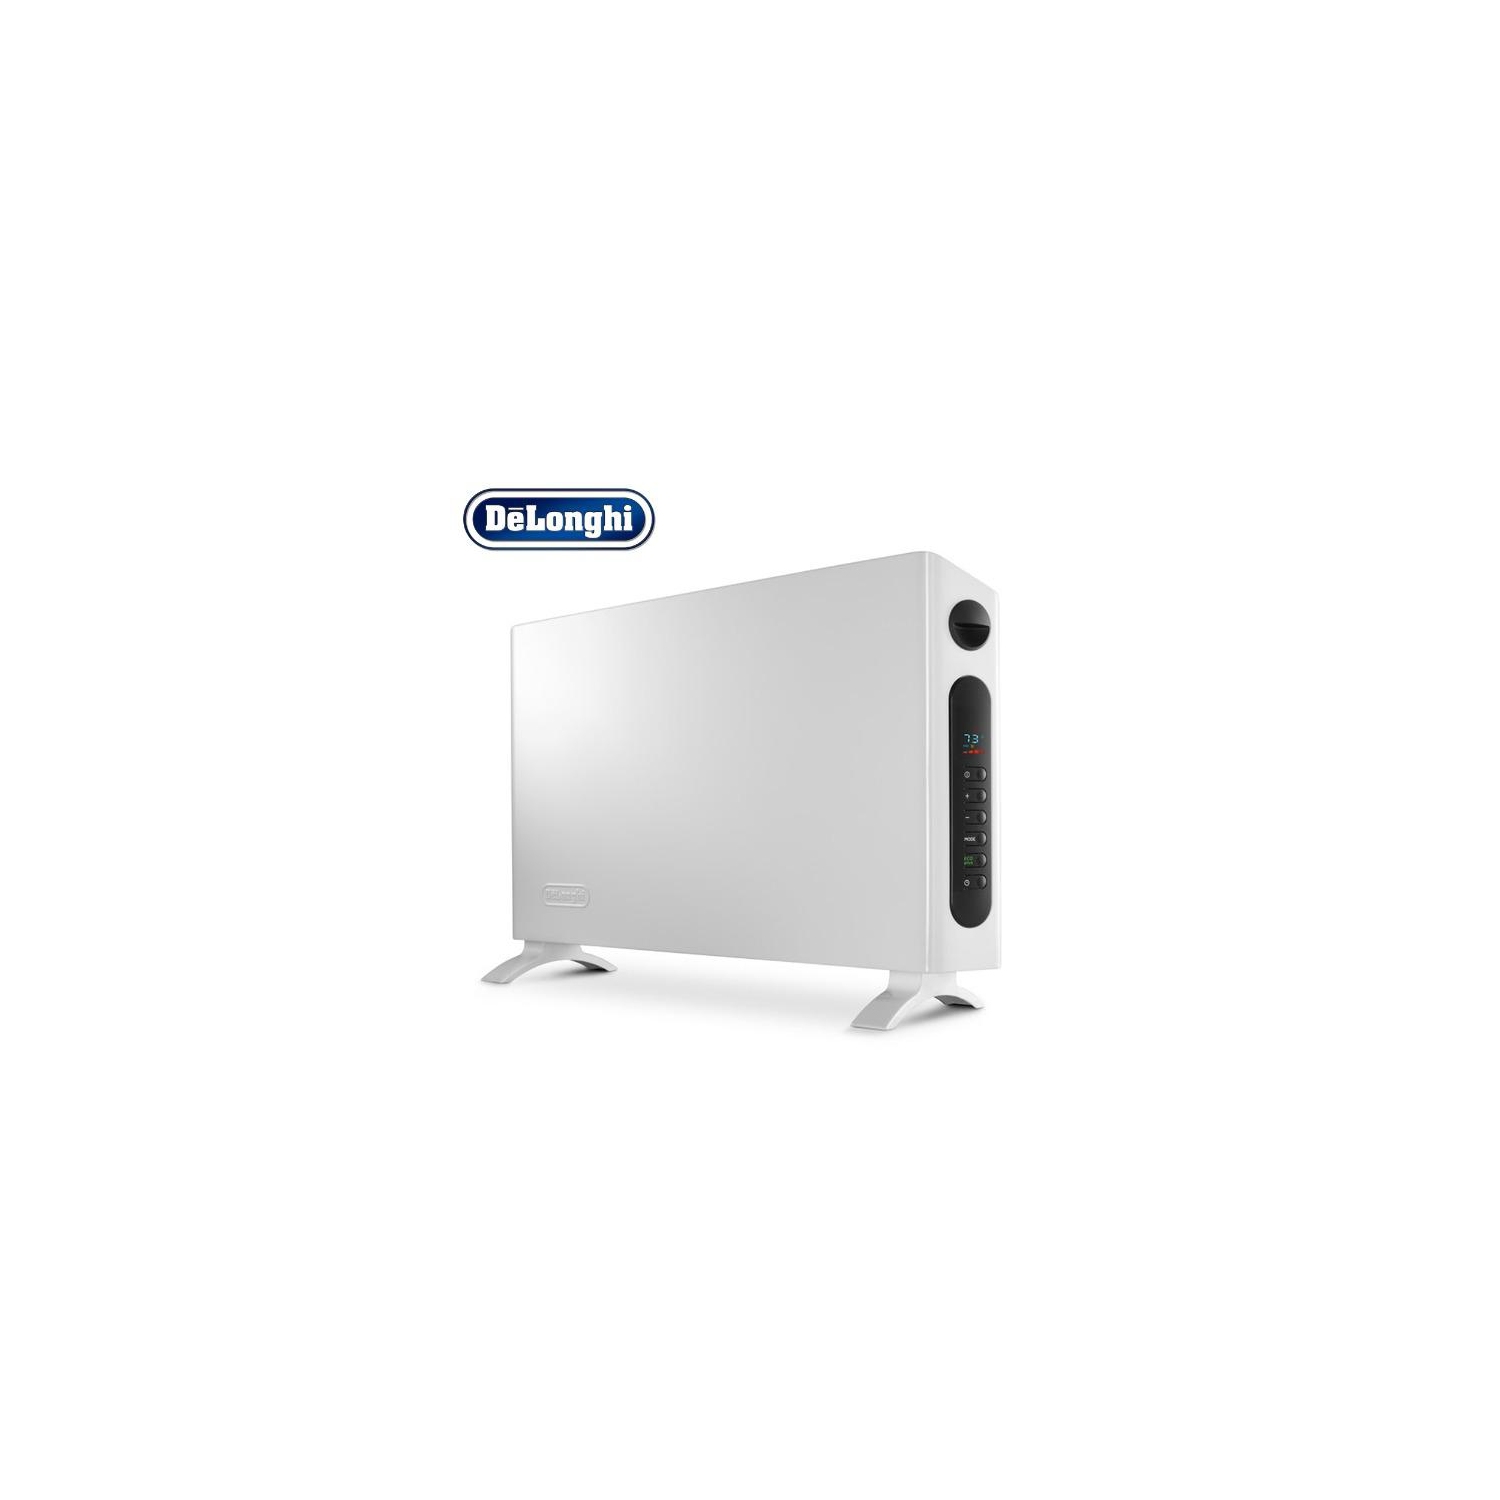 Delonghi Slim Style Digital Convection Panel Heater with Fan - HSX4315ECA ( Open Box)